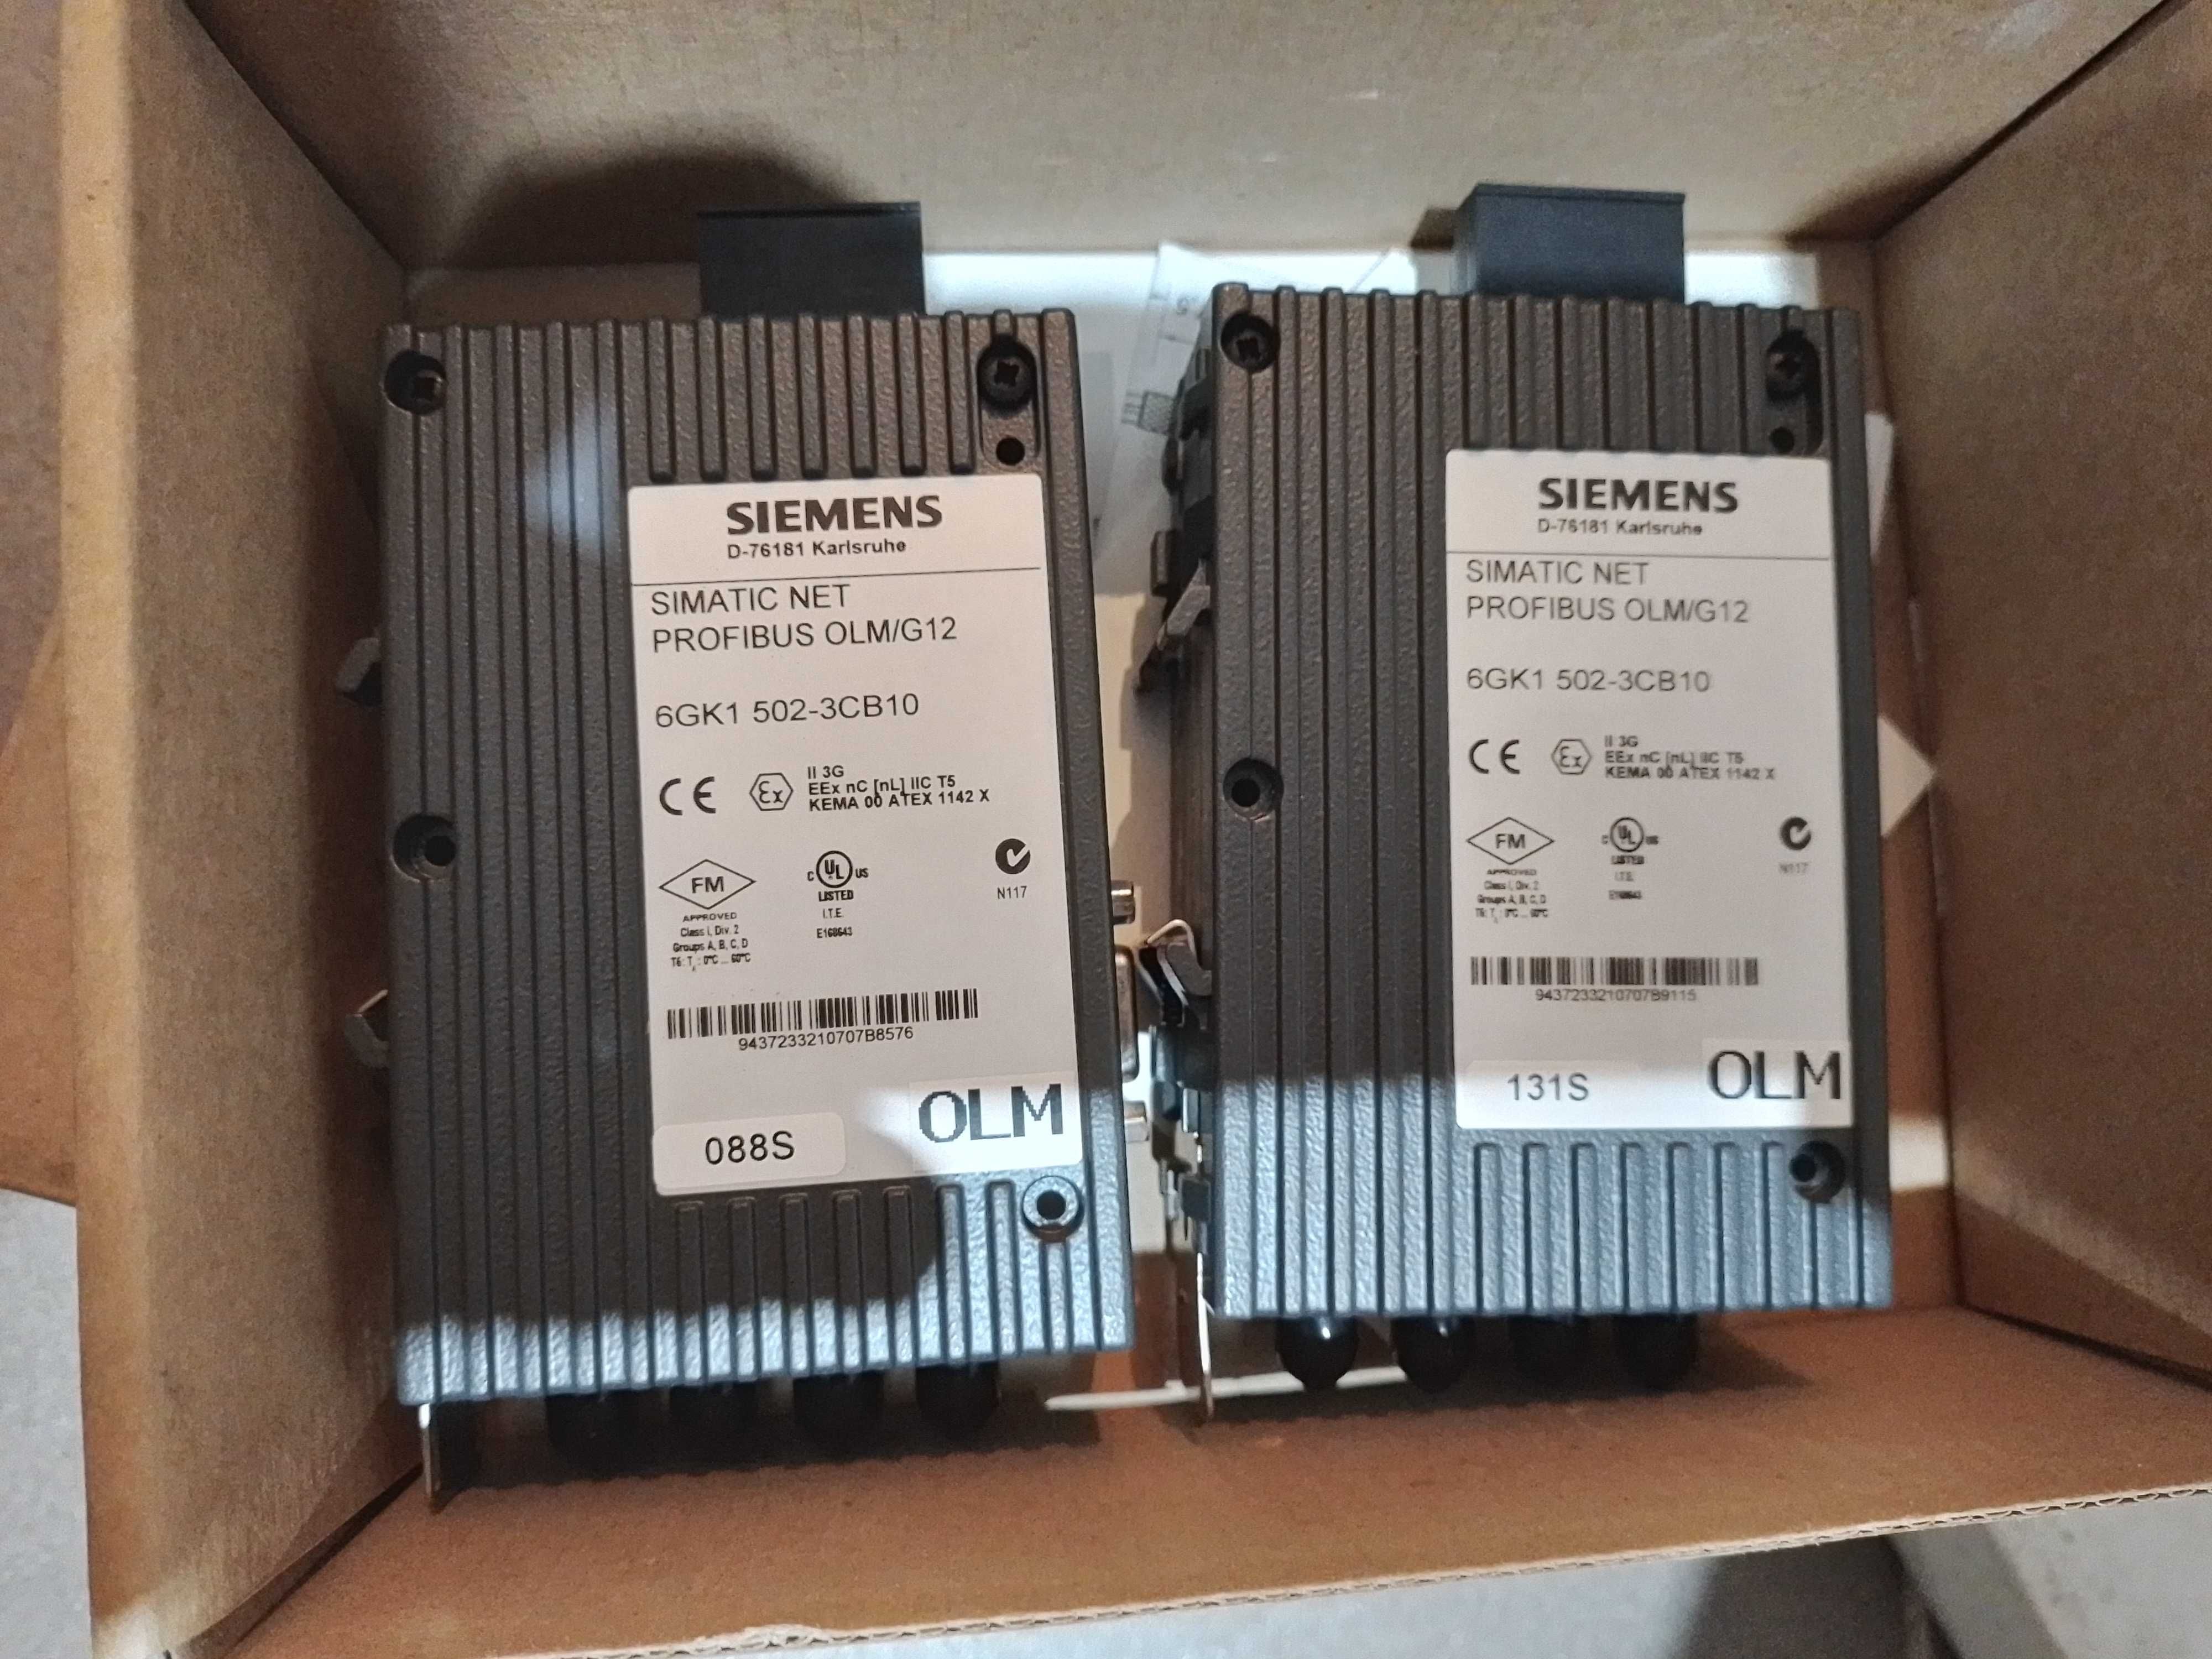 2x Siemens Profibus OLM/G12 6GK1 502-3CB10